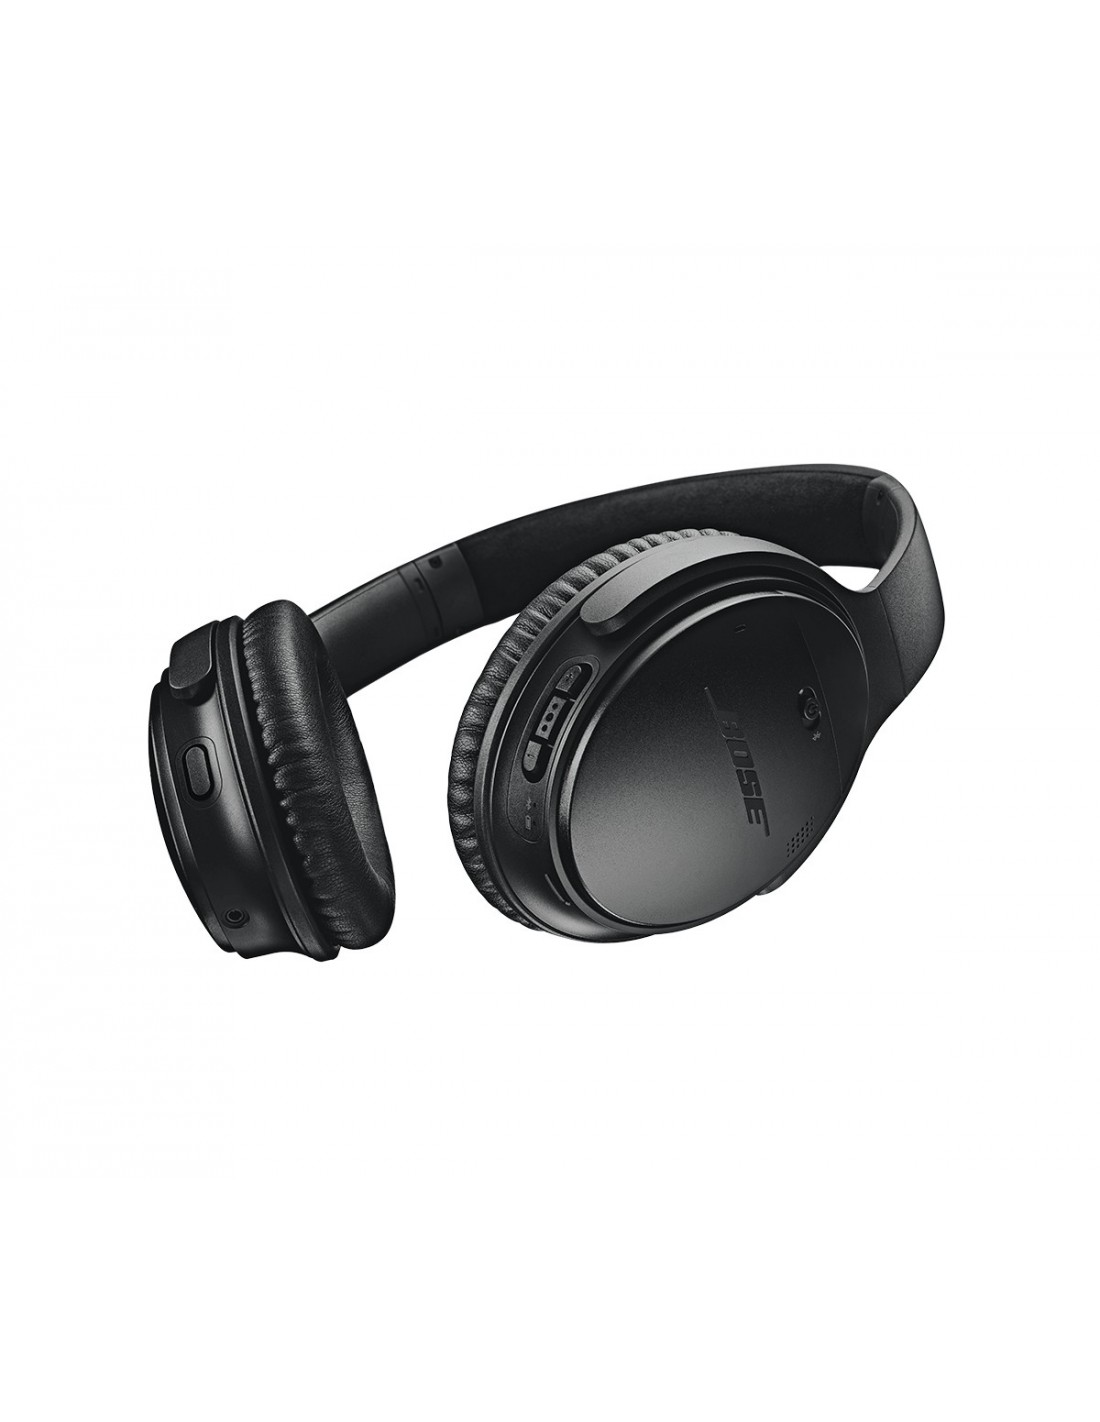 Bose QuietComfort 35 (Serie II) - Auriculares inalámbricos auriculares  solamente talla única Negro